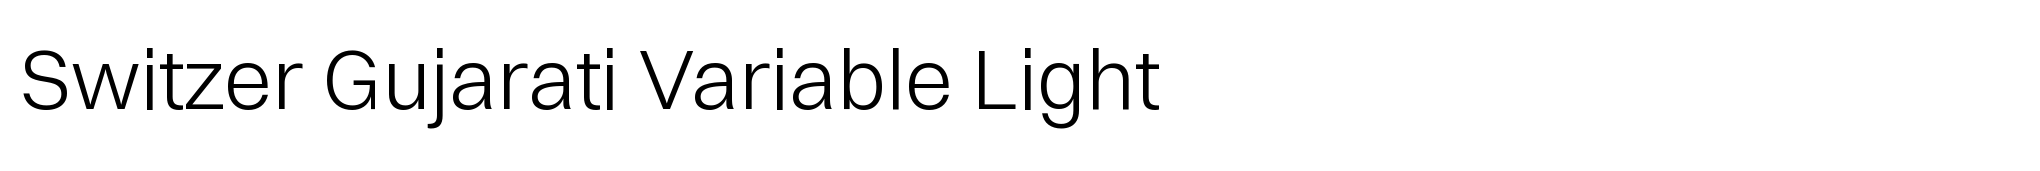 Switzer Gujarati Variable Light image